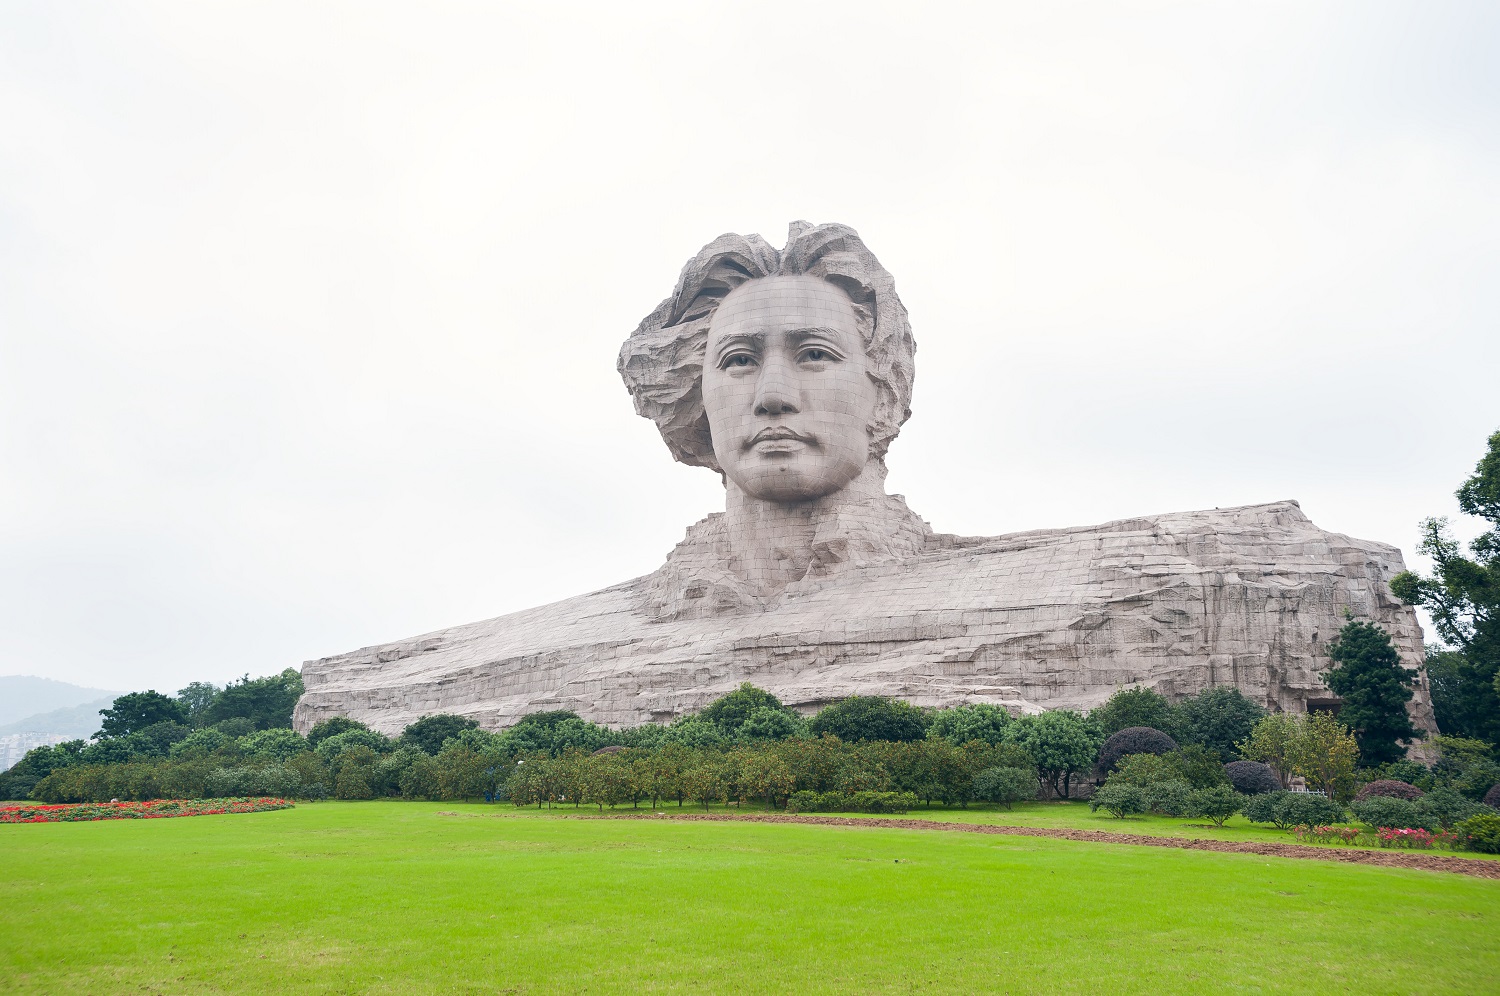 A stone statue of Chairman Mao in Changsha, Hunan Province, China.